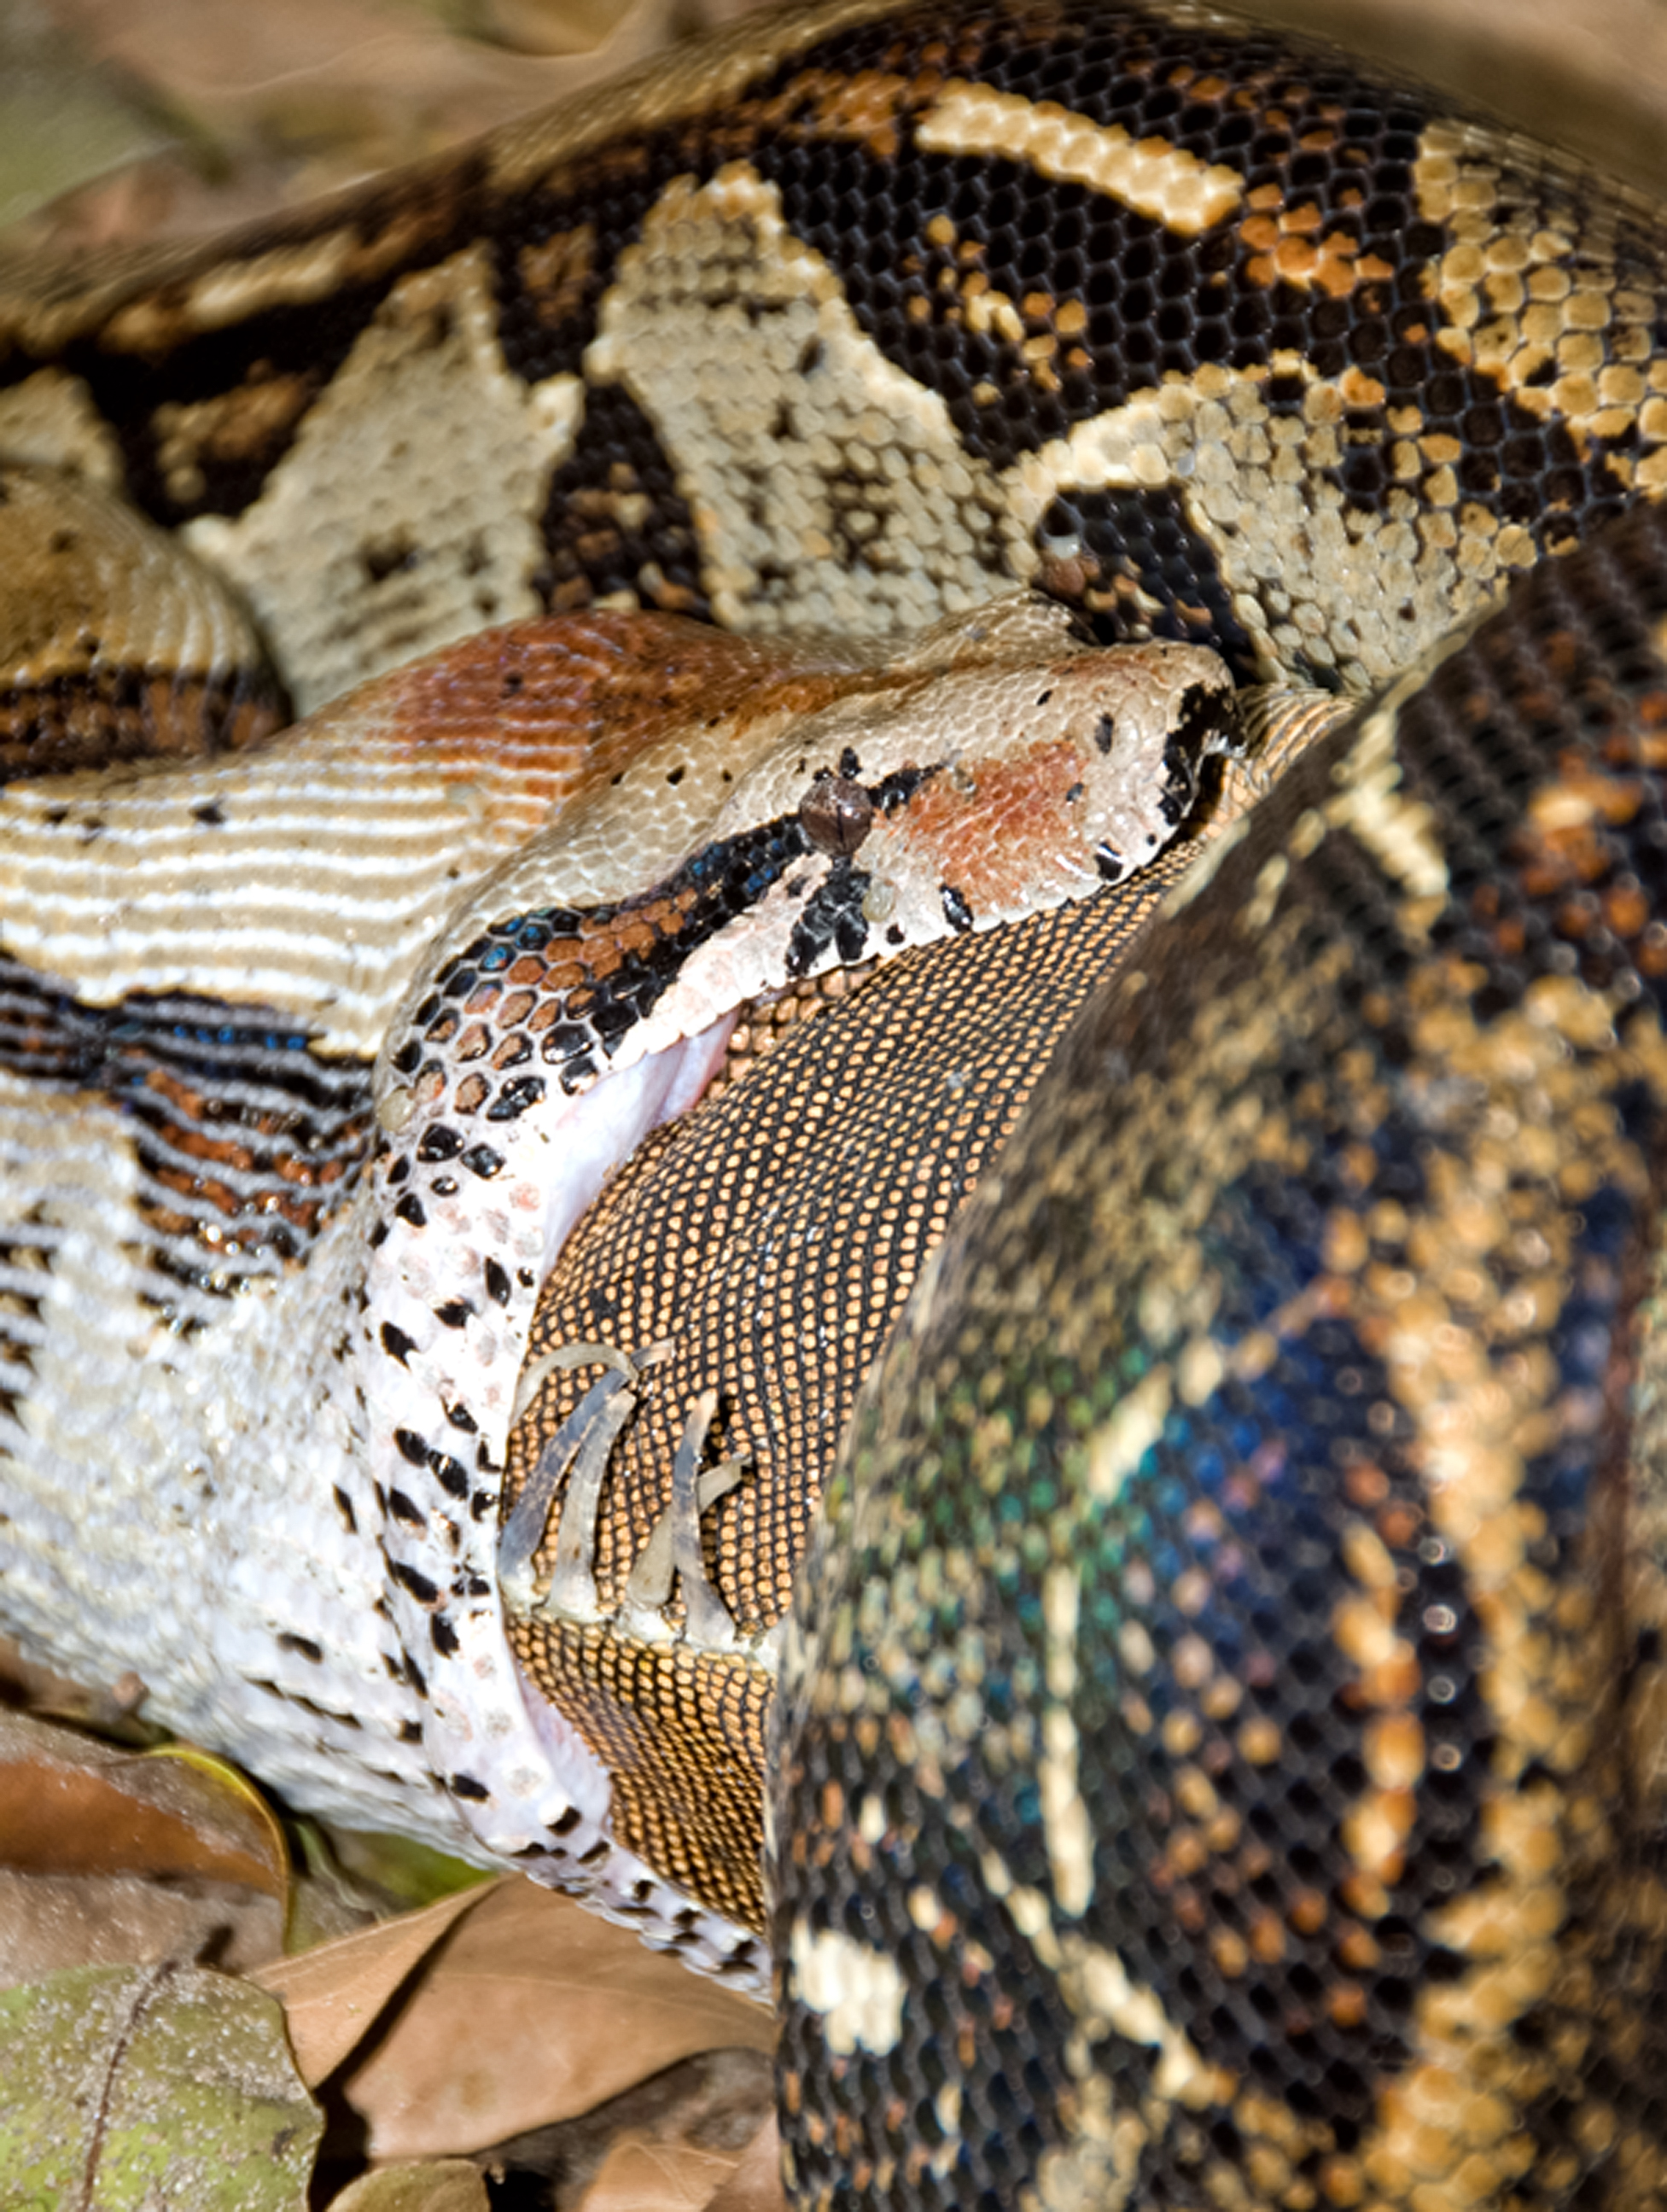 Snake-eating-an-Iguana-Costa-Rica-Photo-398.jpg